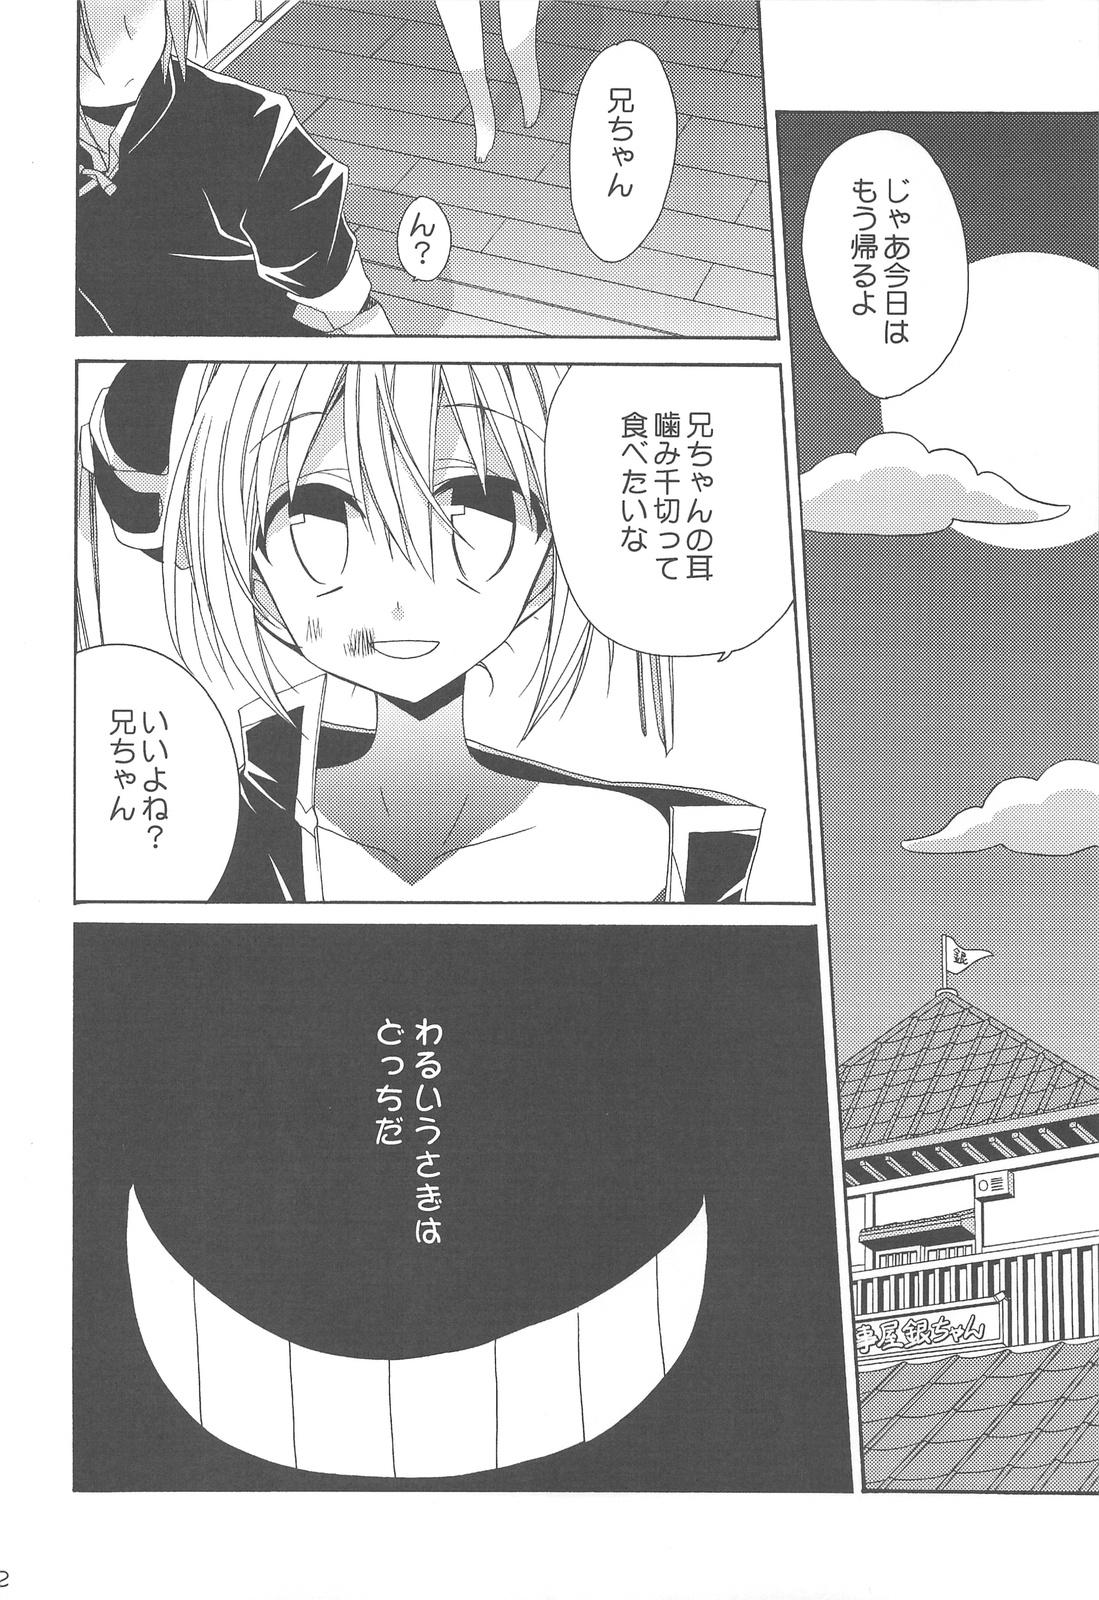 Roludo heroine syndrome - Gintama Banho - Page 11